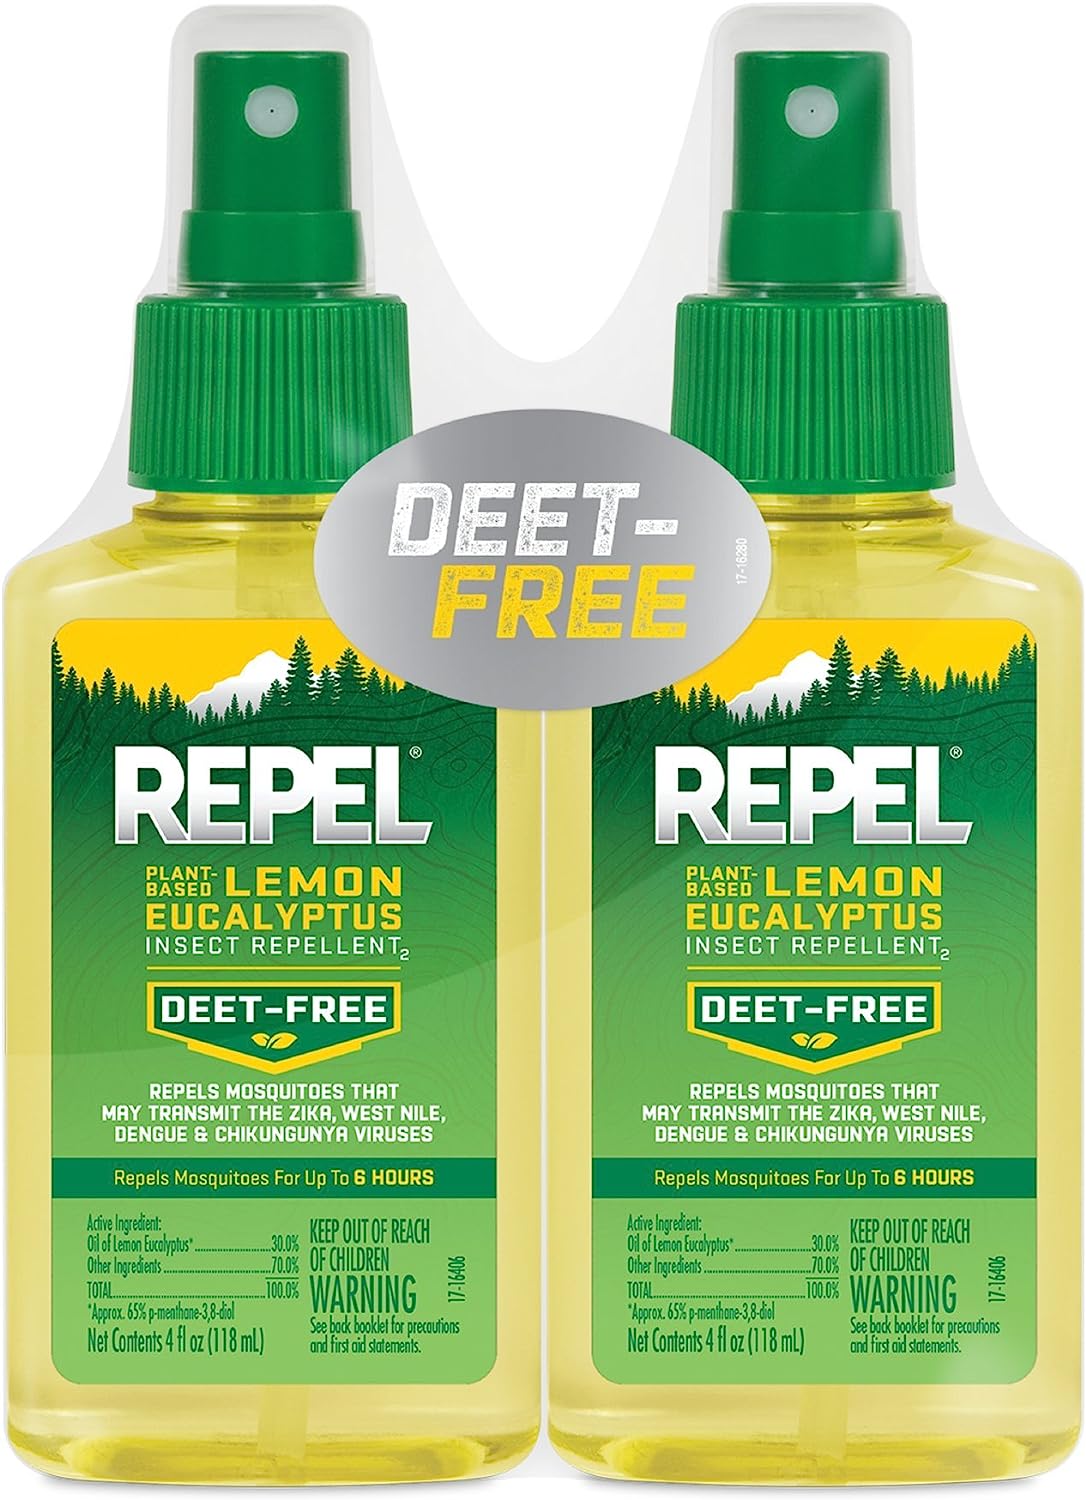 Repel Plant-Based Lemon Eucalyptus Insect Repellent, [...]